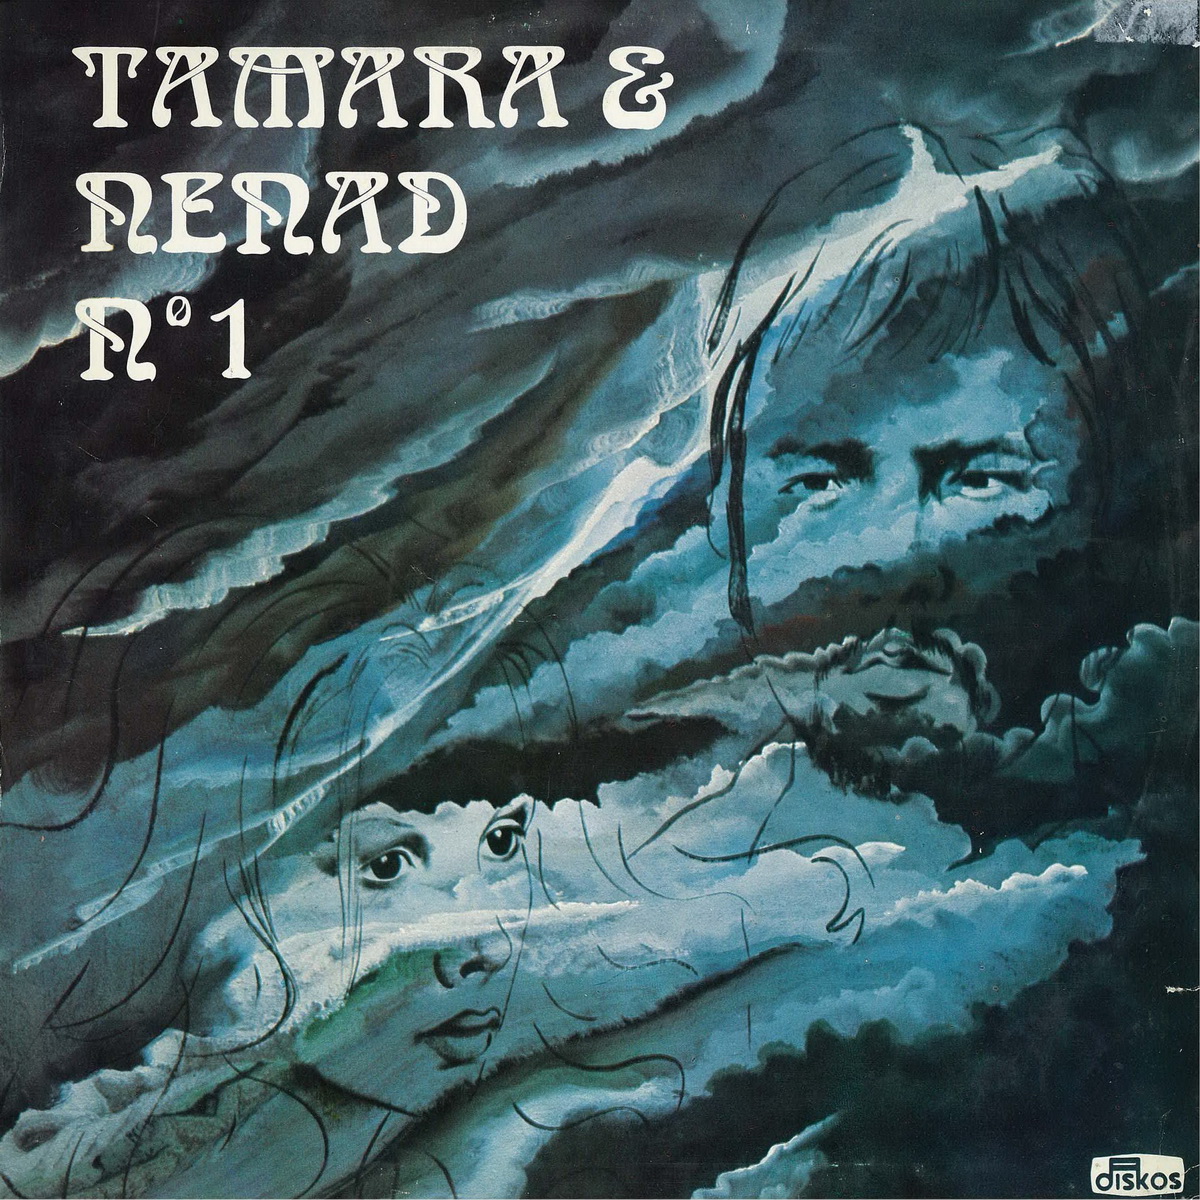 Tamara i Nenad Pavlovic 1976 No 1 a